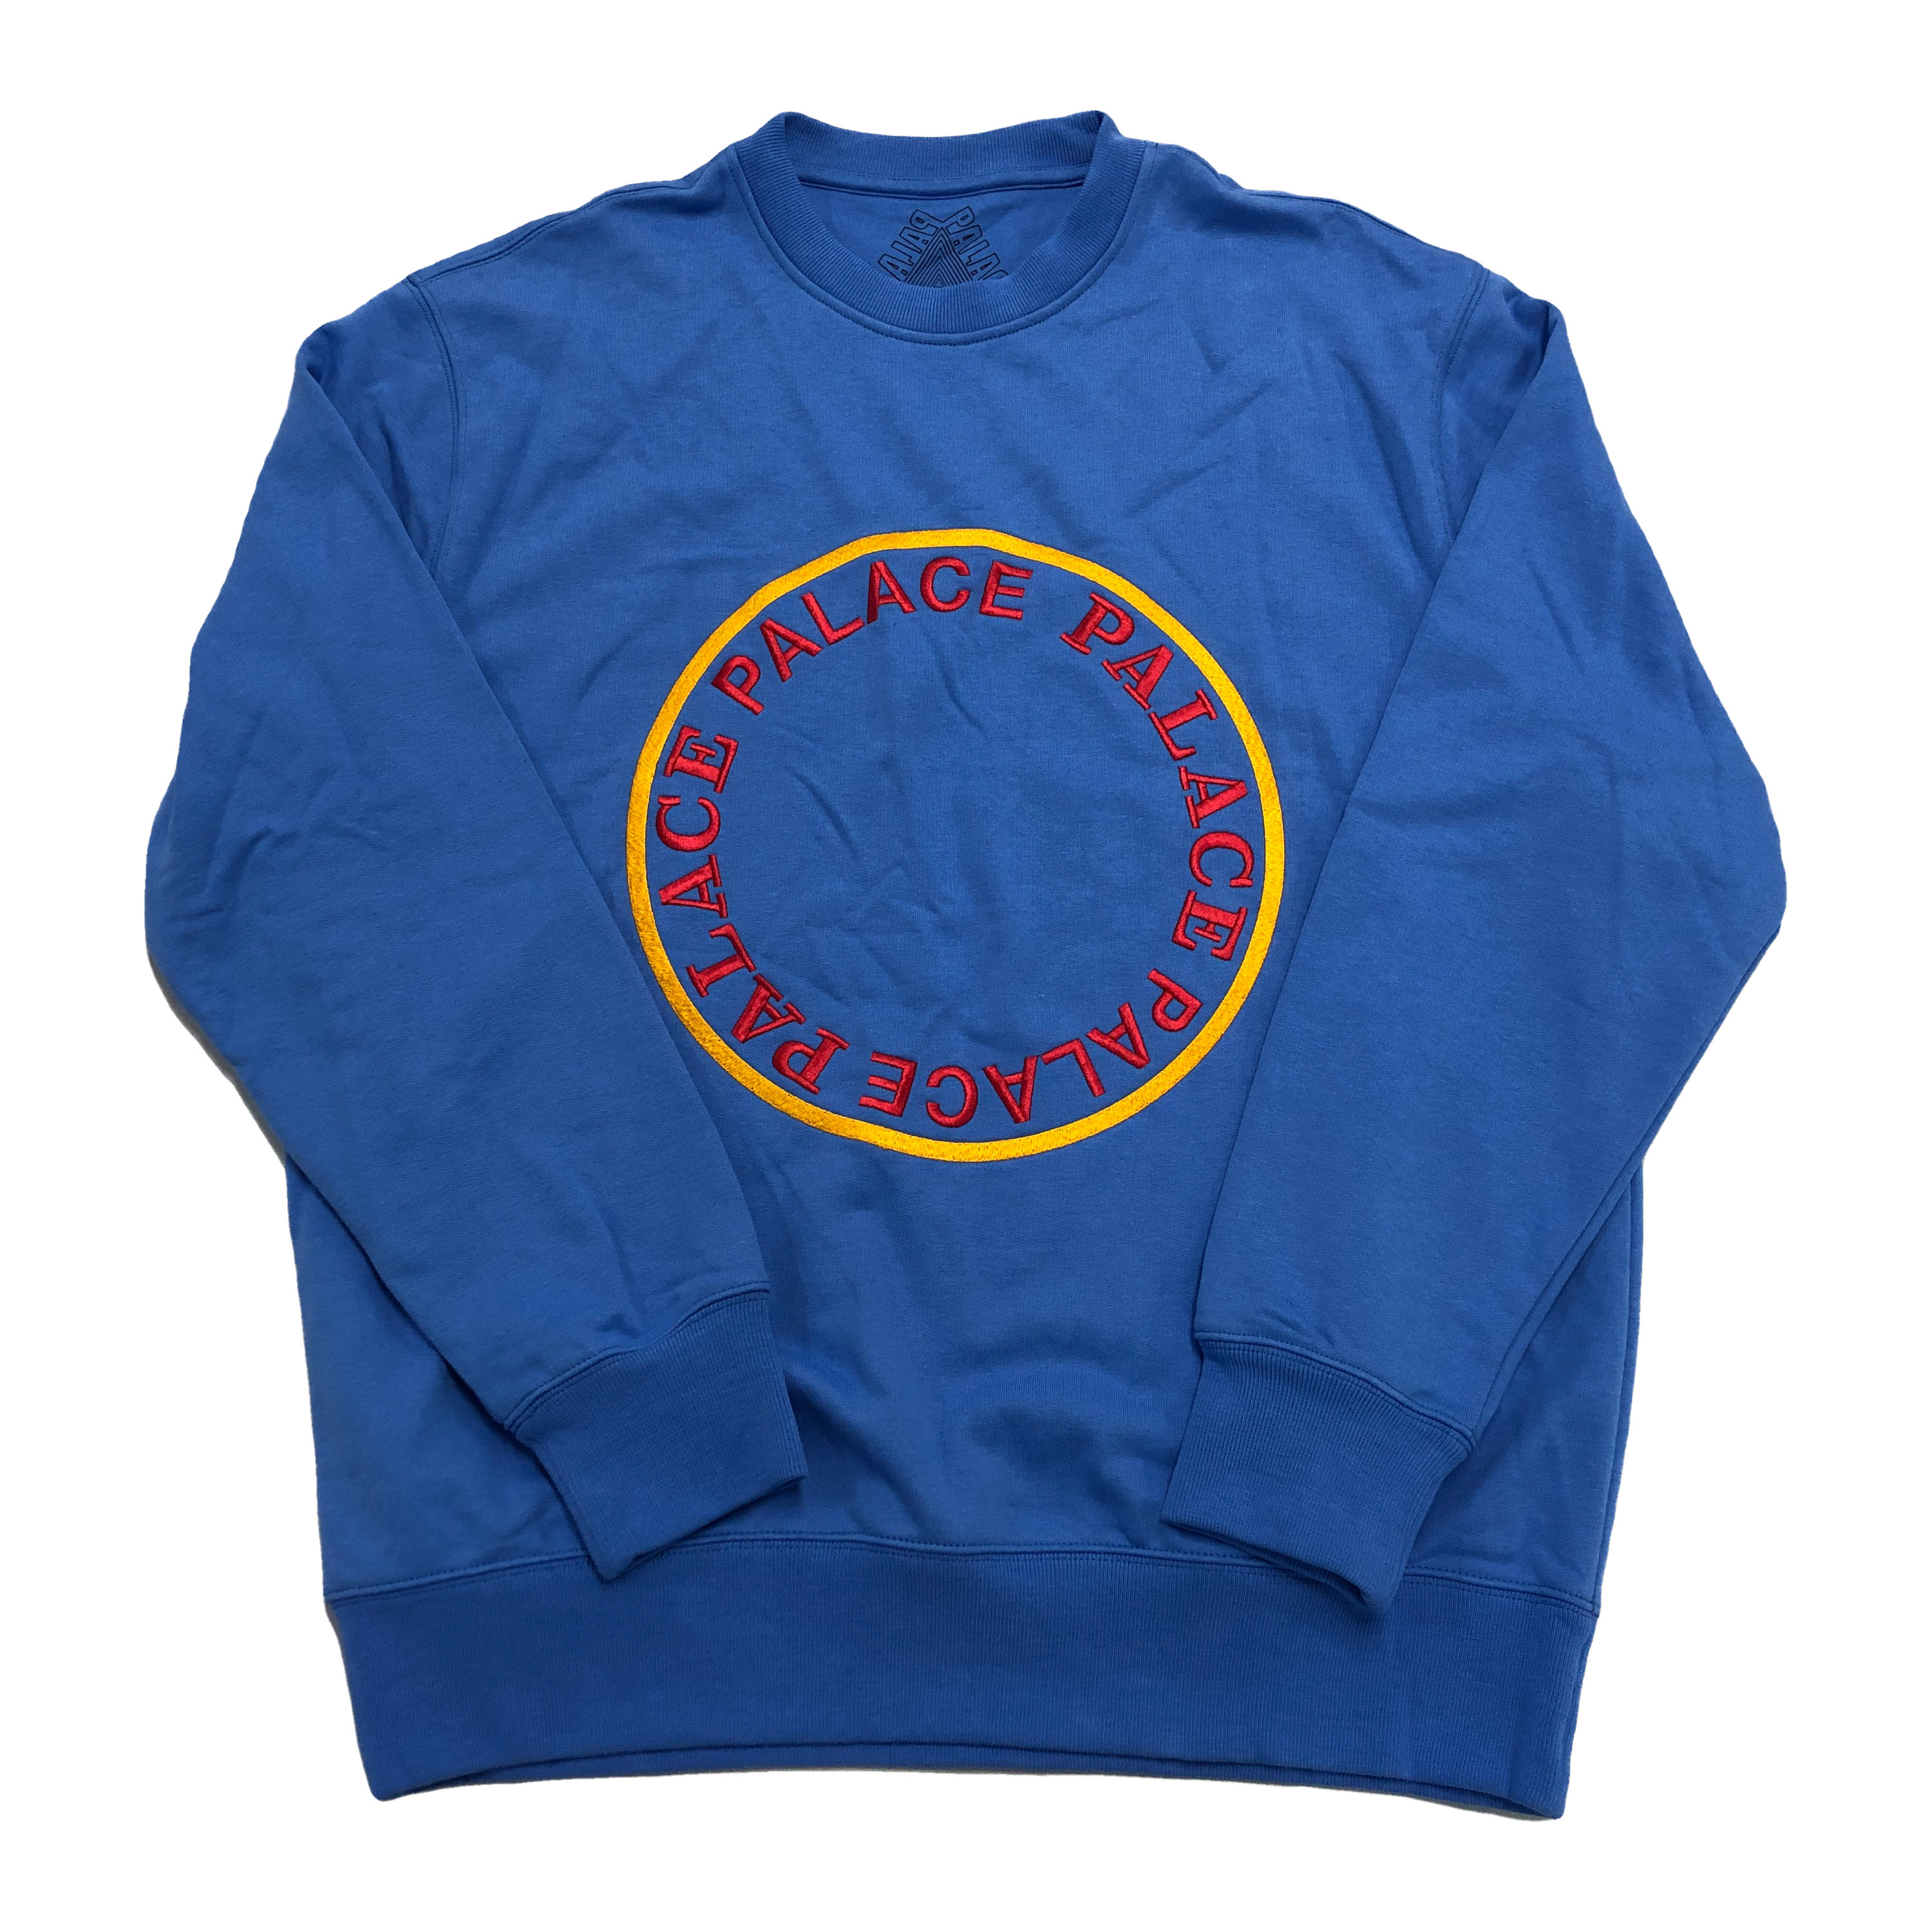 [Palace] Light Blue Circular Lettering Sweatshirt - Size L